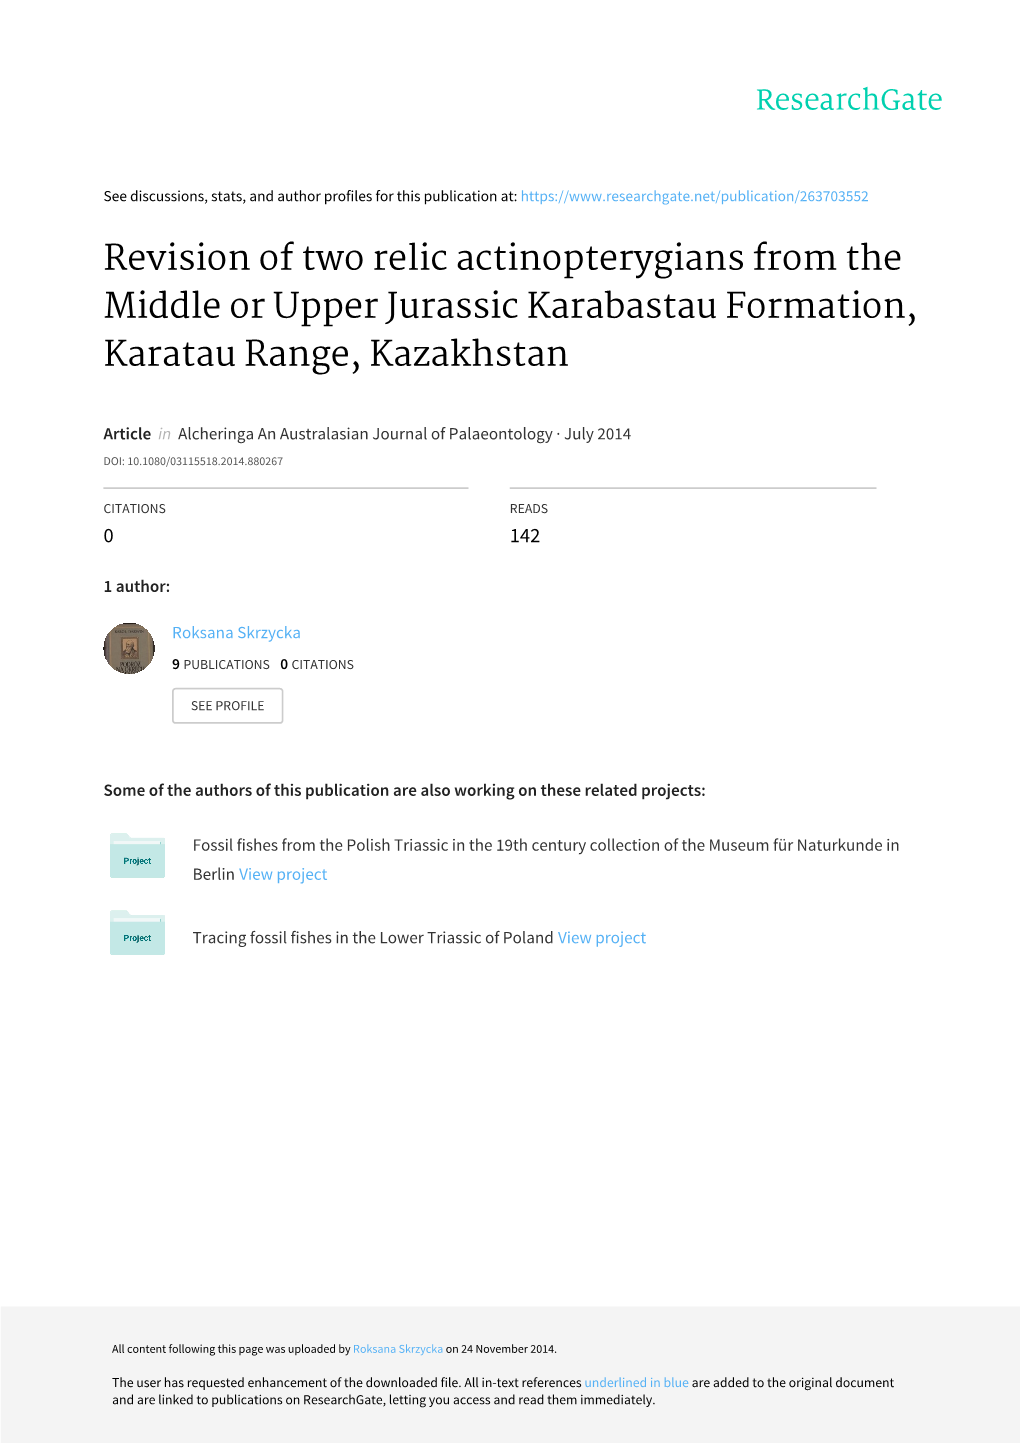 Revision of Two Relic Actinopterygians from the Middle Or Upper Jurassic Karabastau Formation, Karatau Range, Kazakhstan